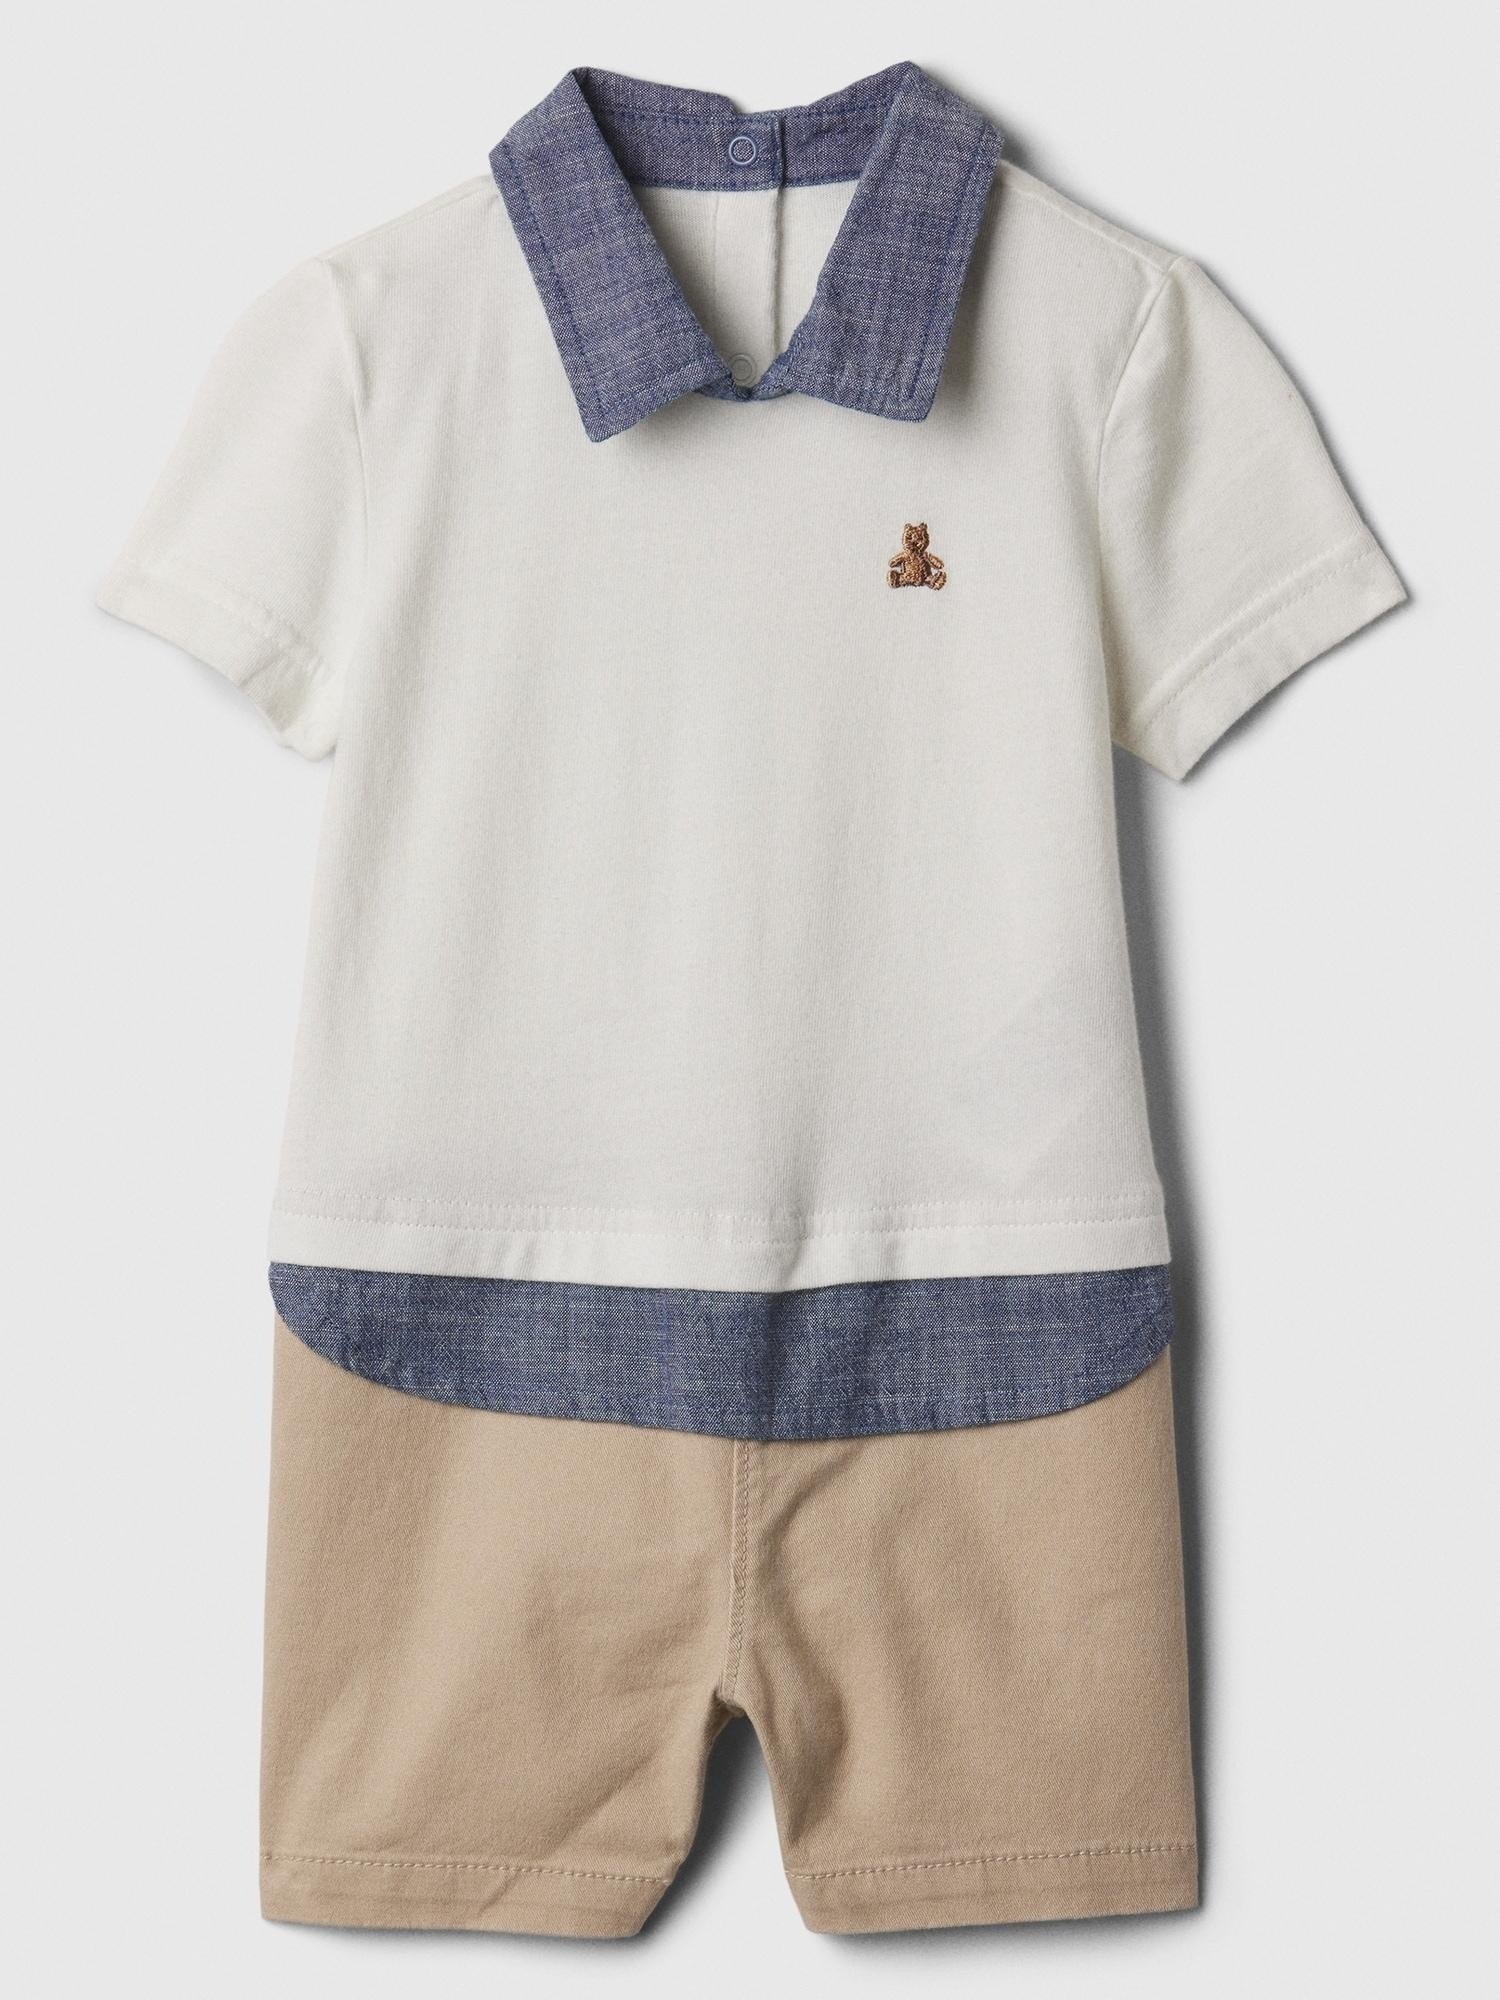 Brannan Bear İşlemeli Polo Yaka Outfit Set product image